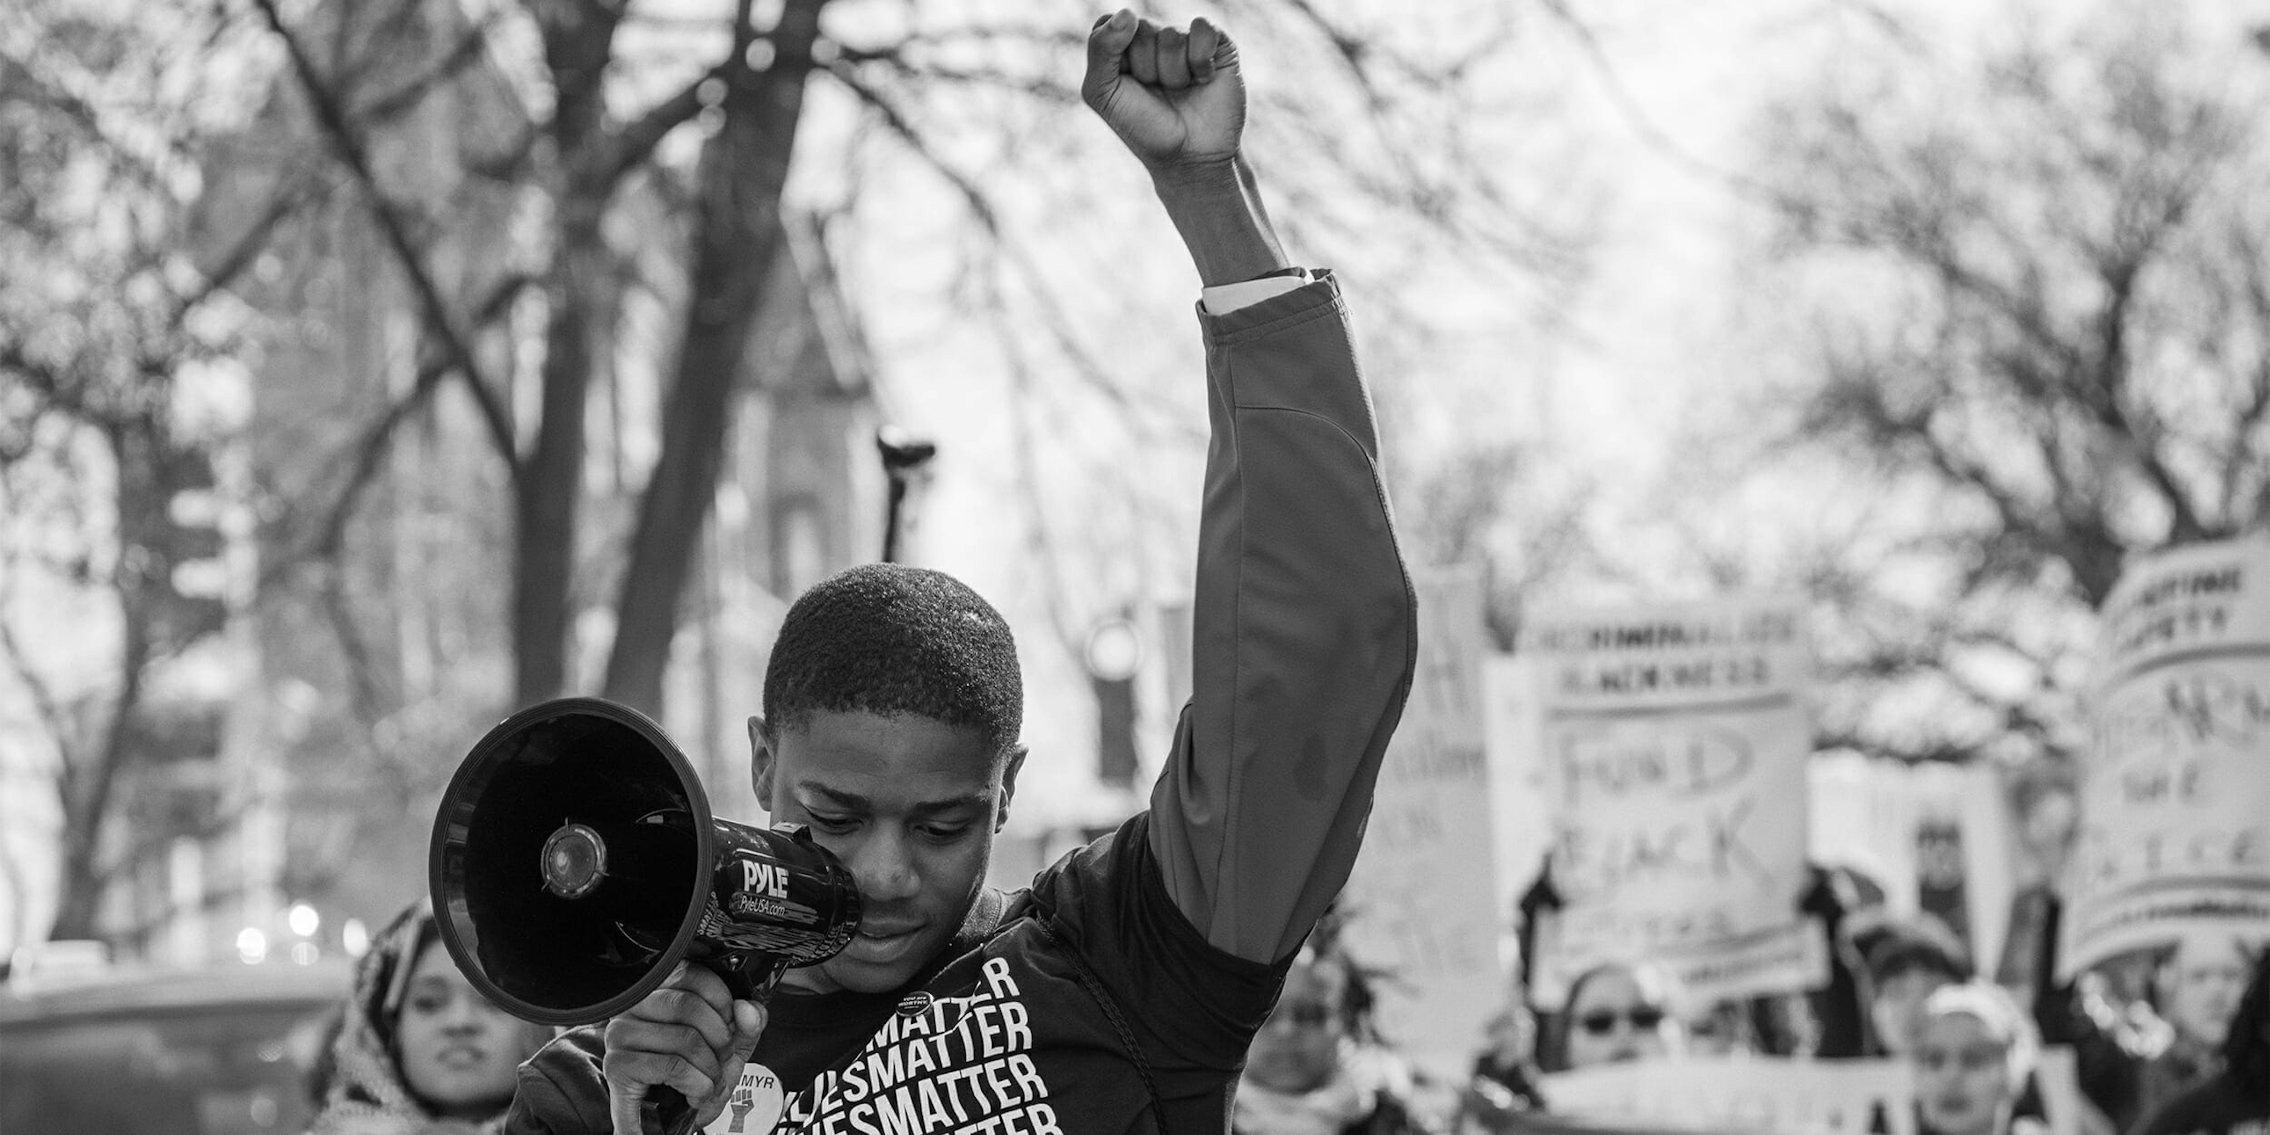 Man in 'Black Lives Matter' shirt raising fist, speaking through megaphone